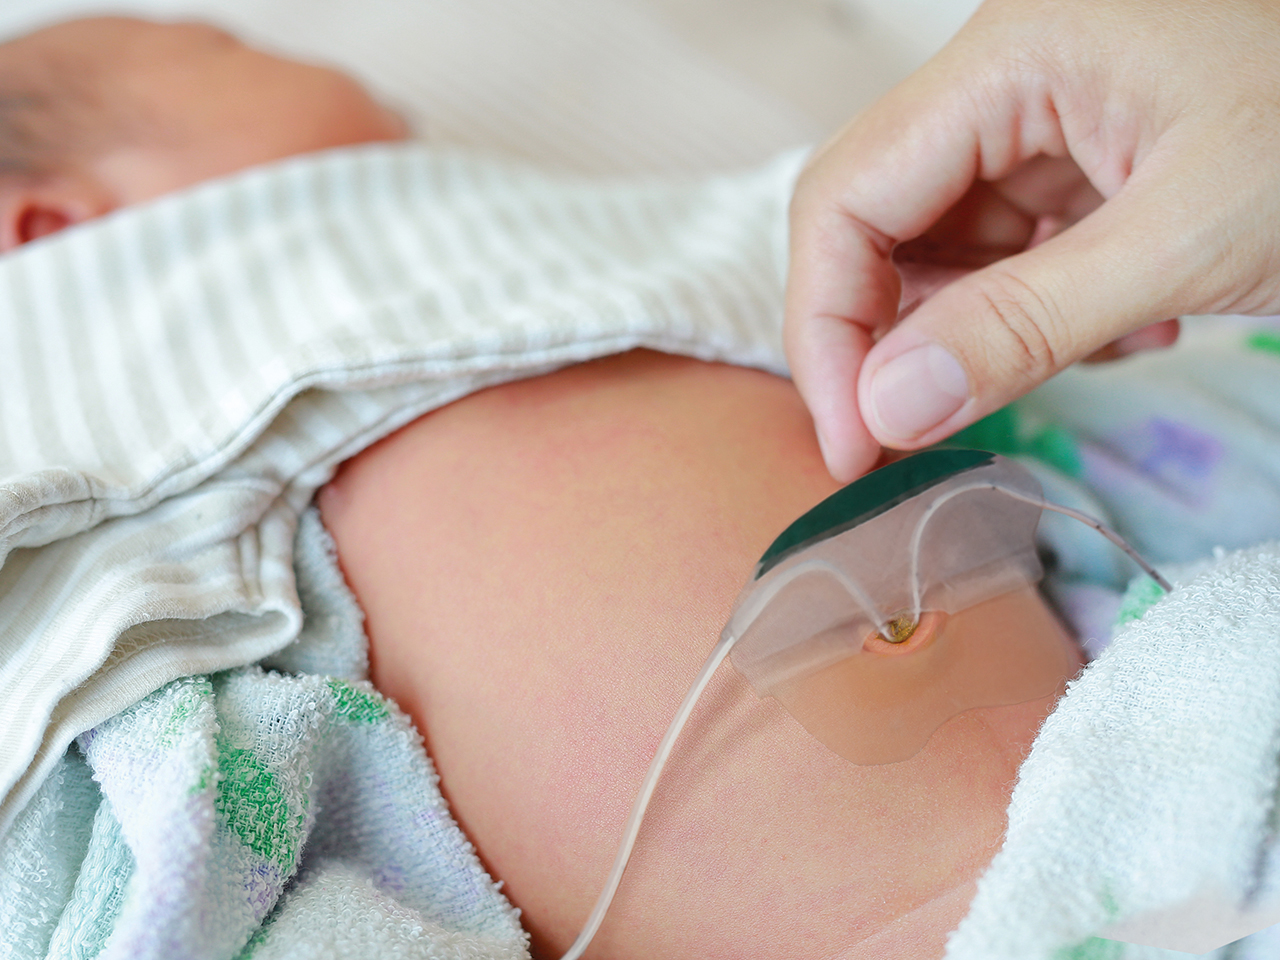 NeoBridge featuring neonatal adhesive, hydrocolloid, in-use on baby.